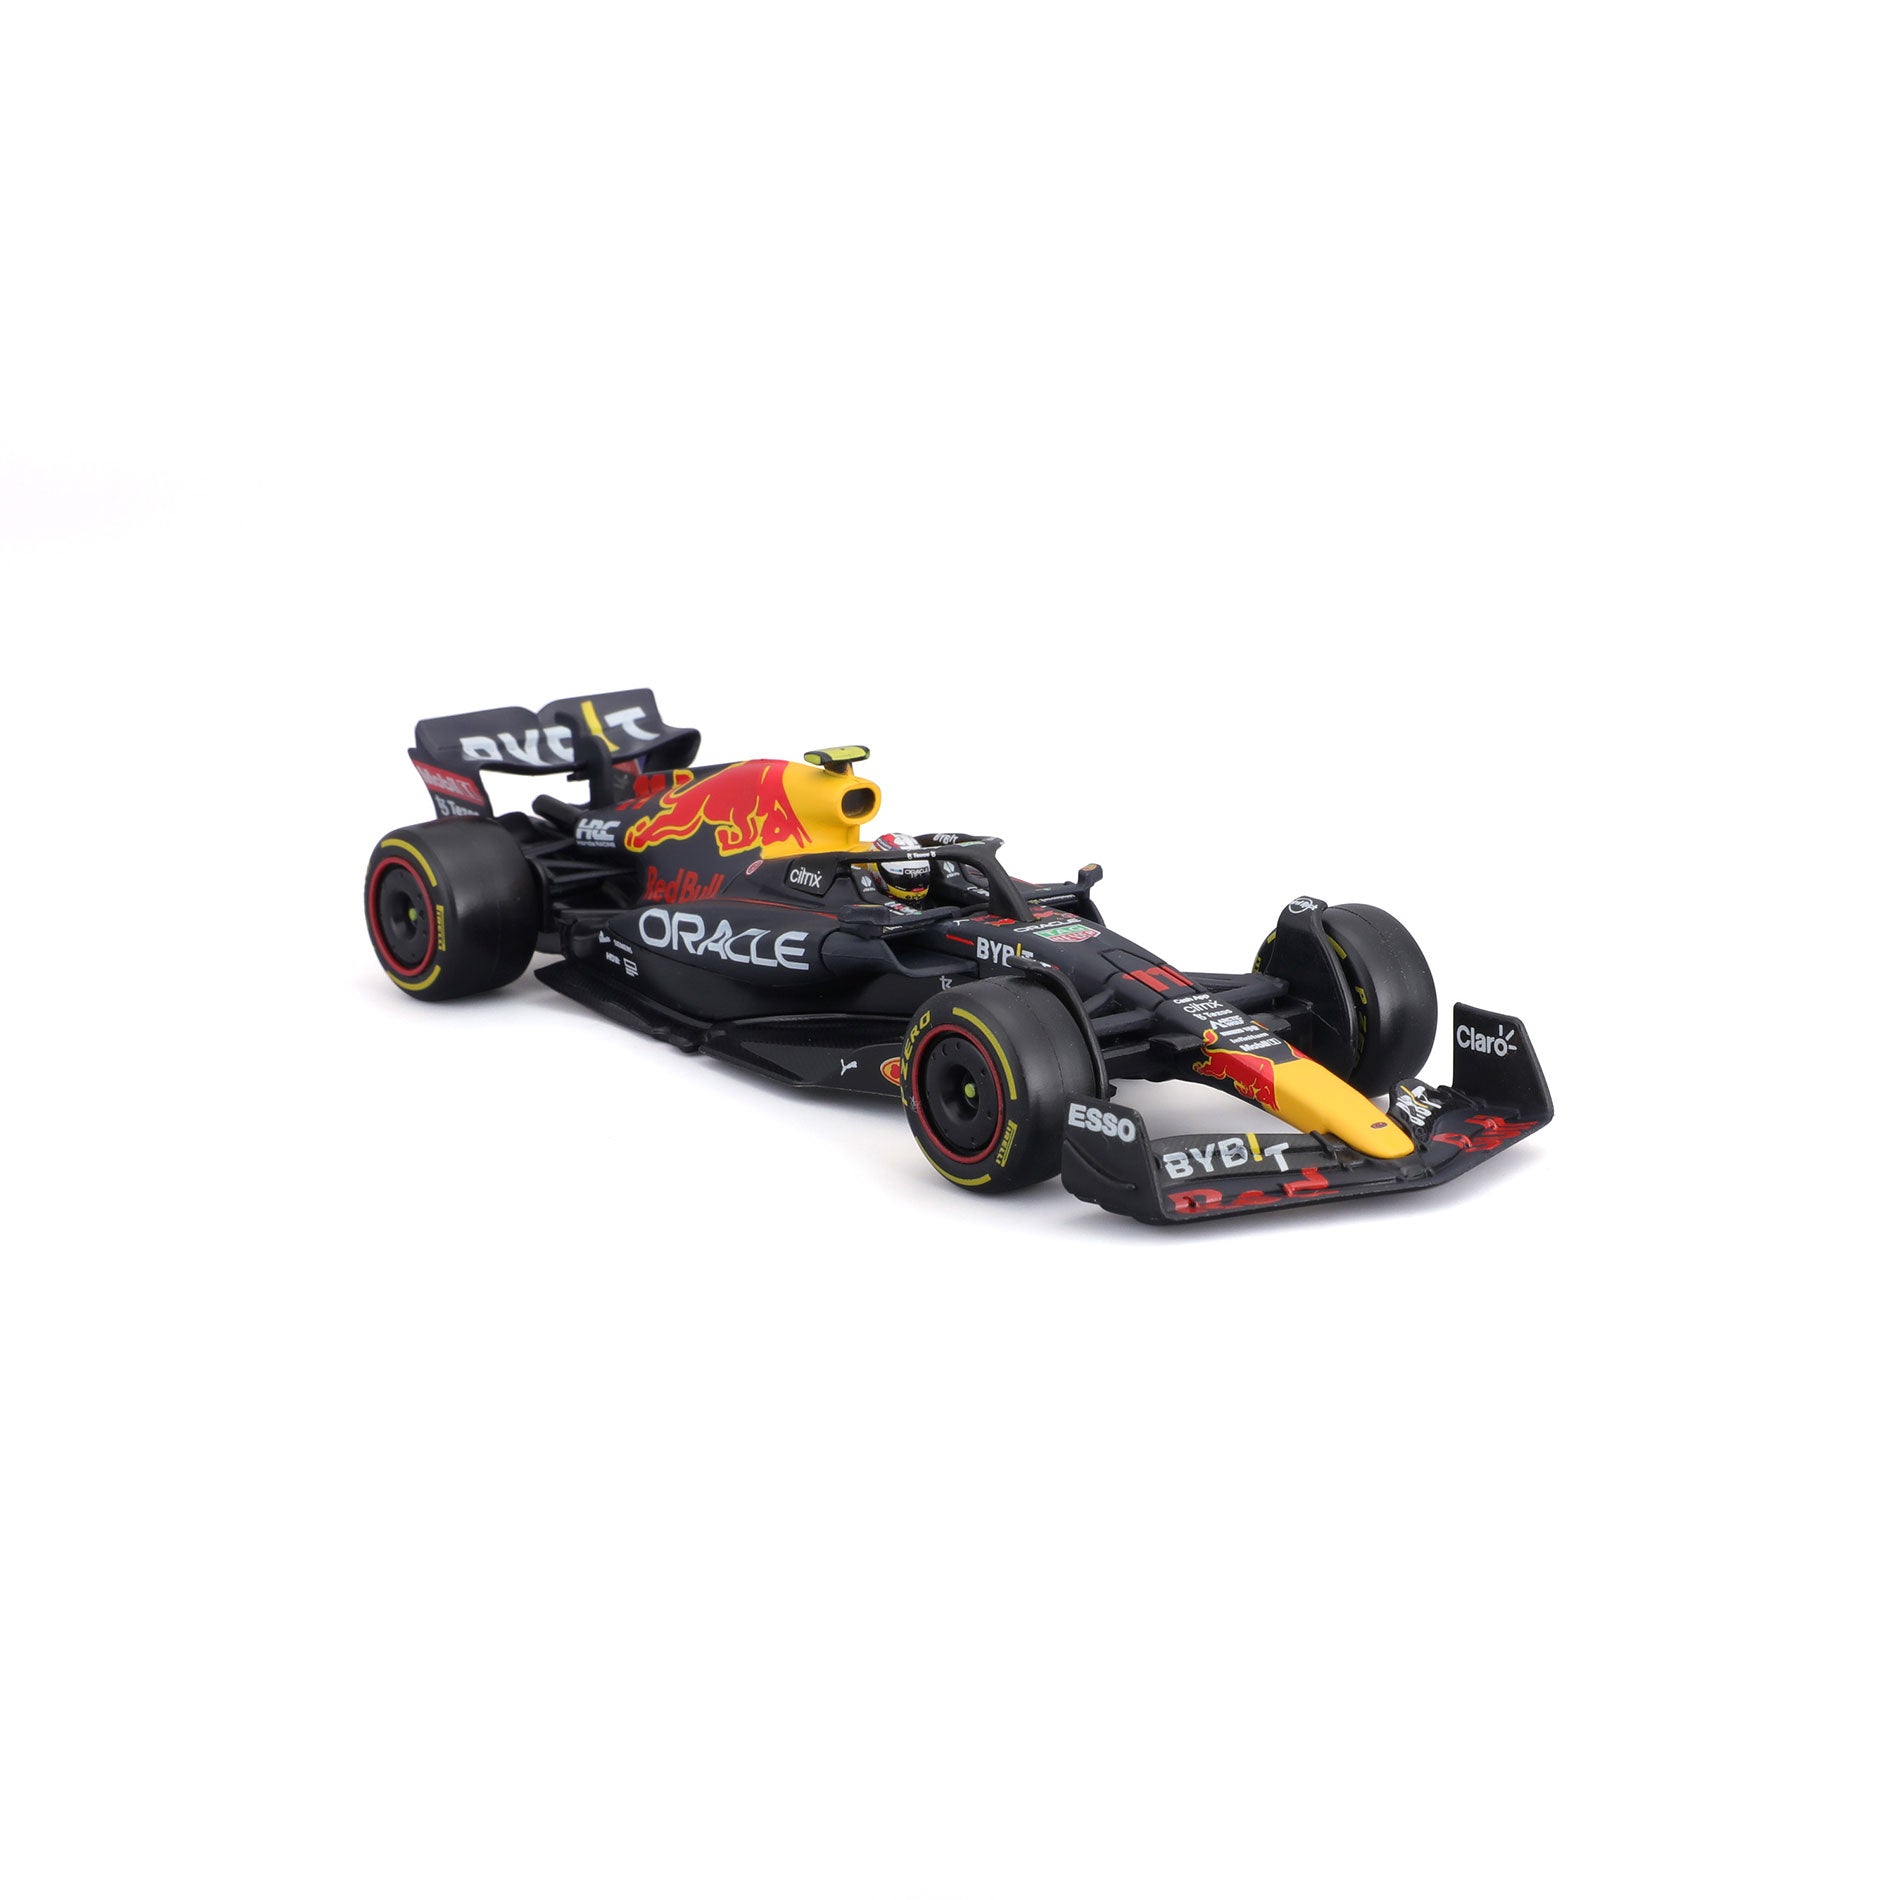 18-38062 (#11) - Bburago - 1:43 - RACE - Red Bull Racing RB18 (20